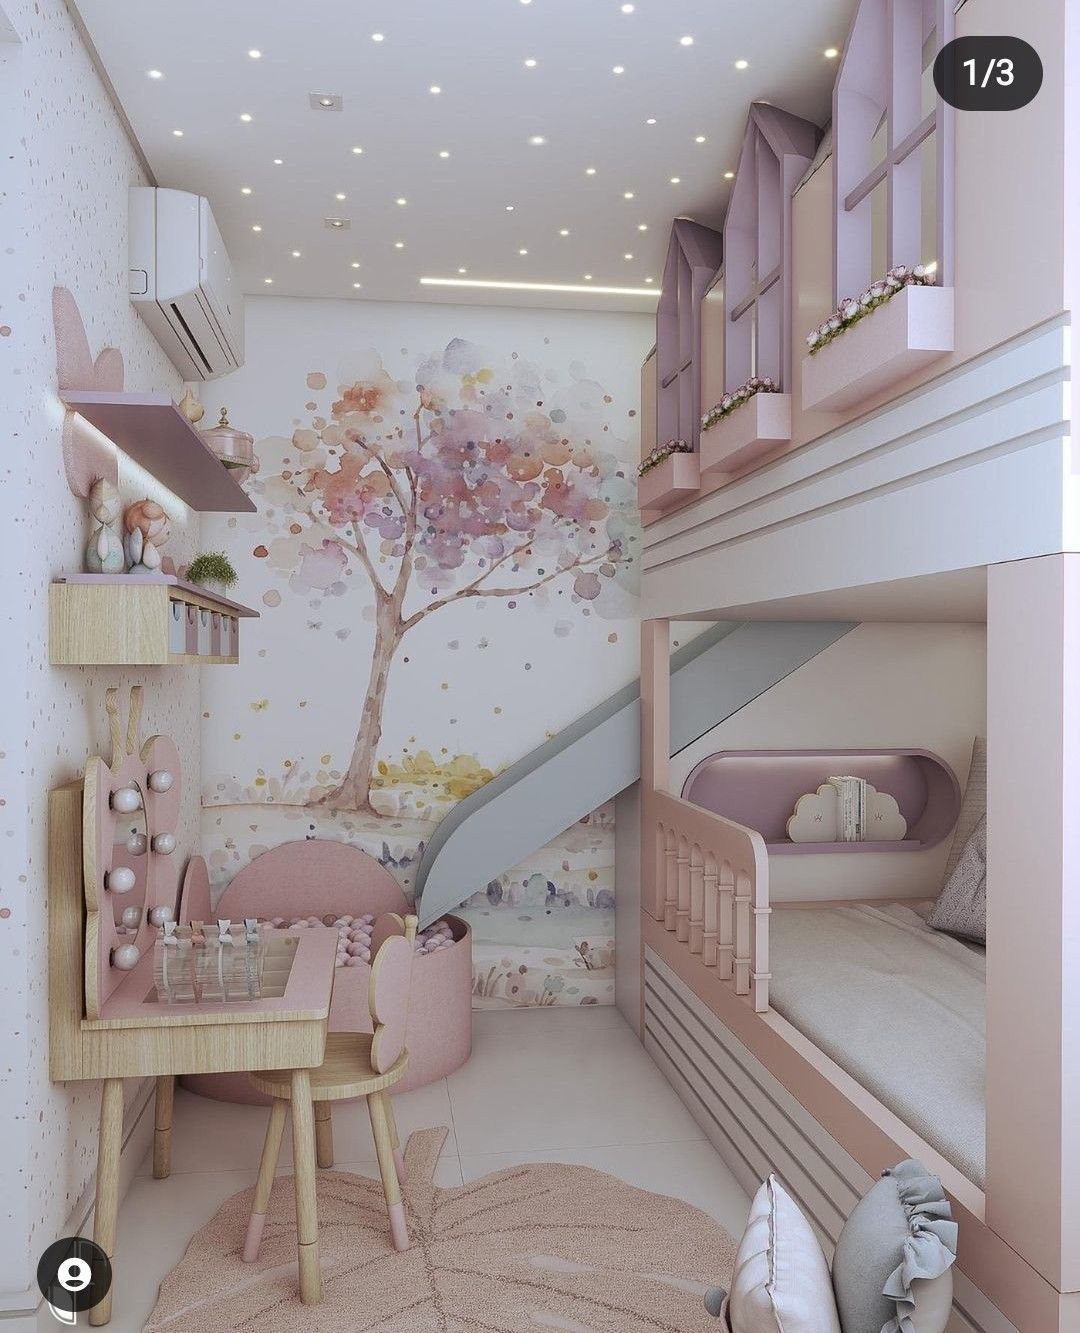 Pink Bedrooms For Girls You’ll Enjoy